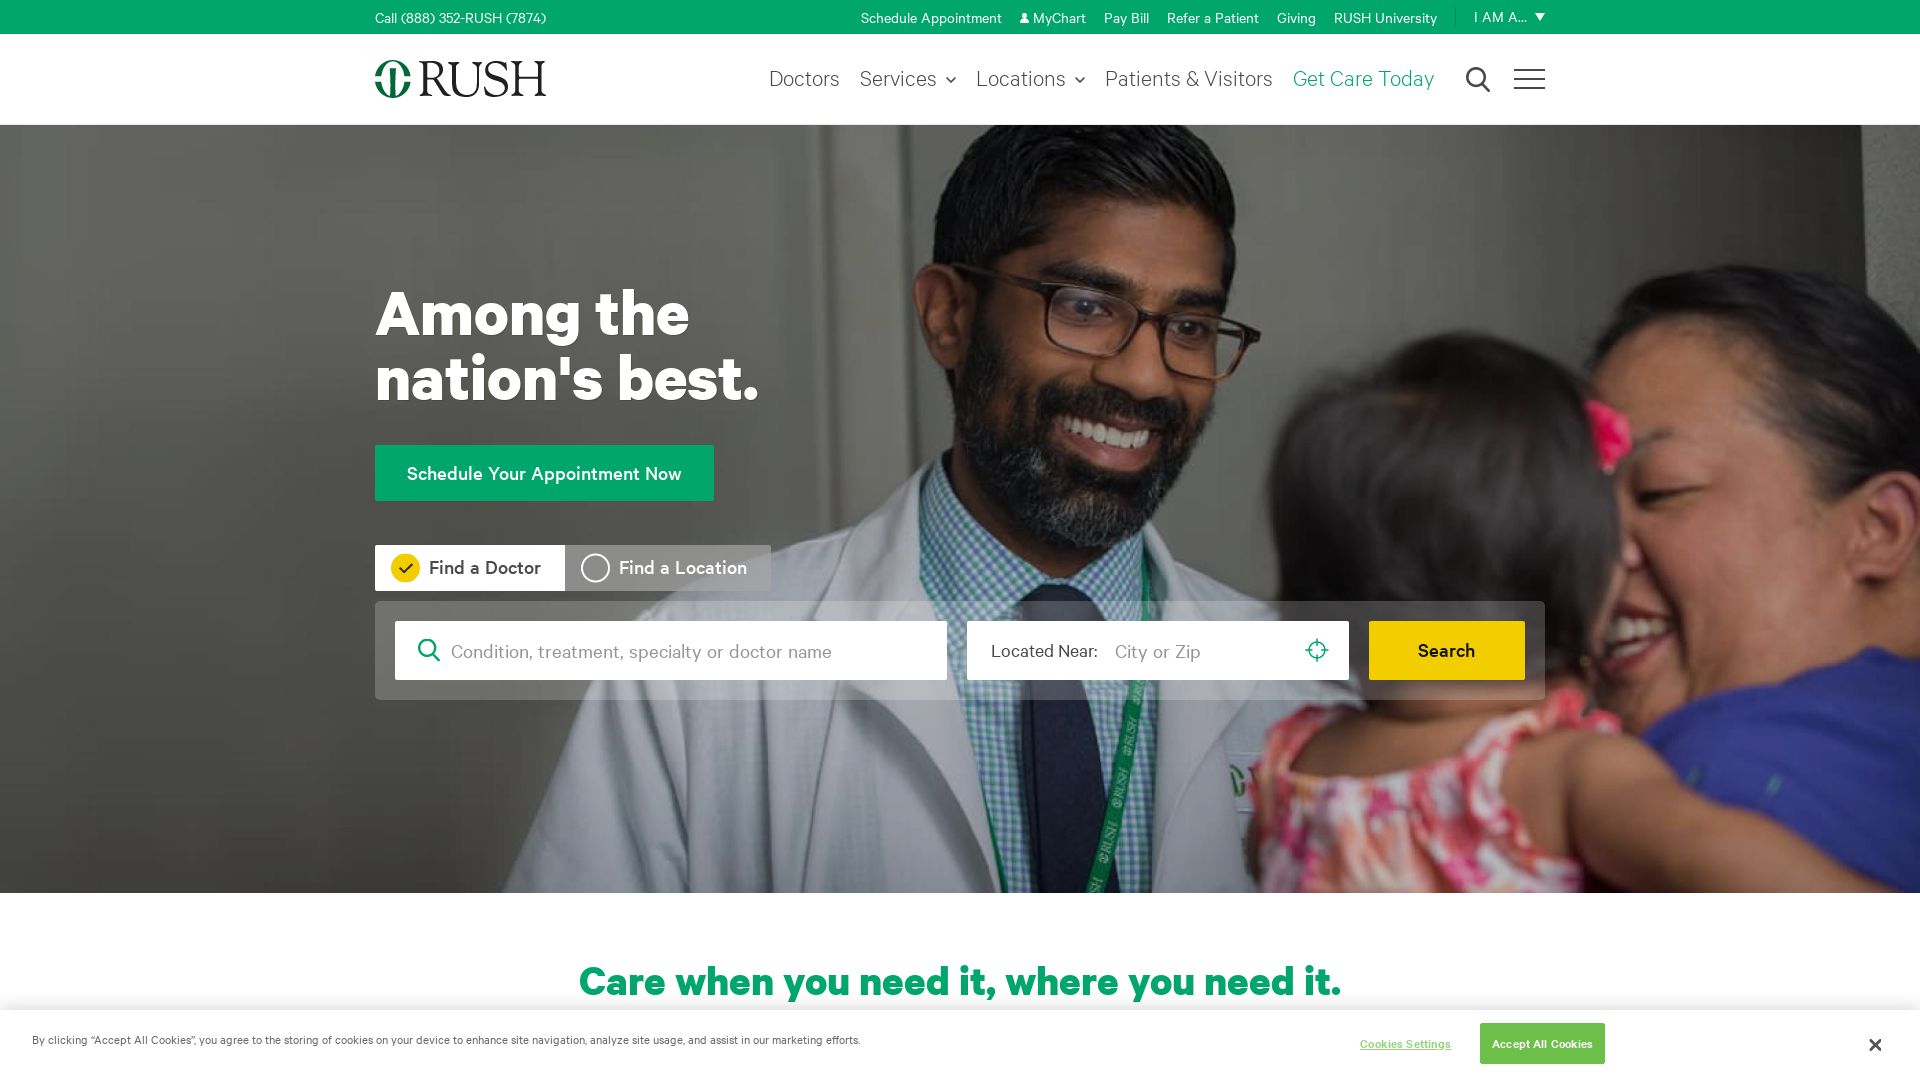 Website status rush.edu is   ONLINE